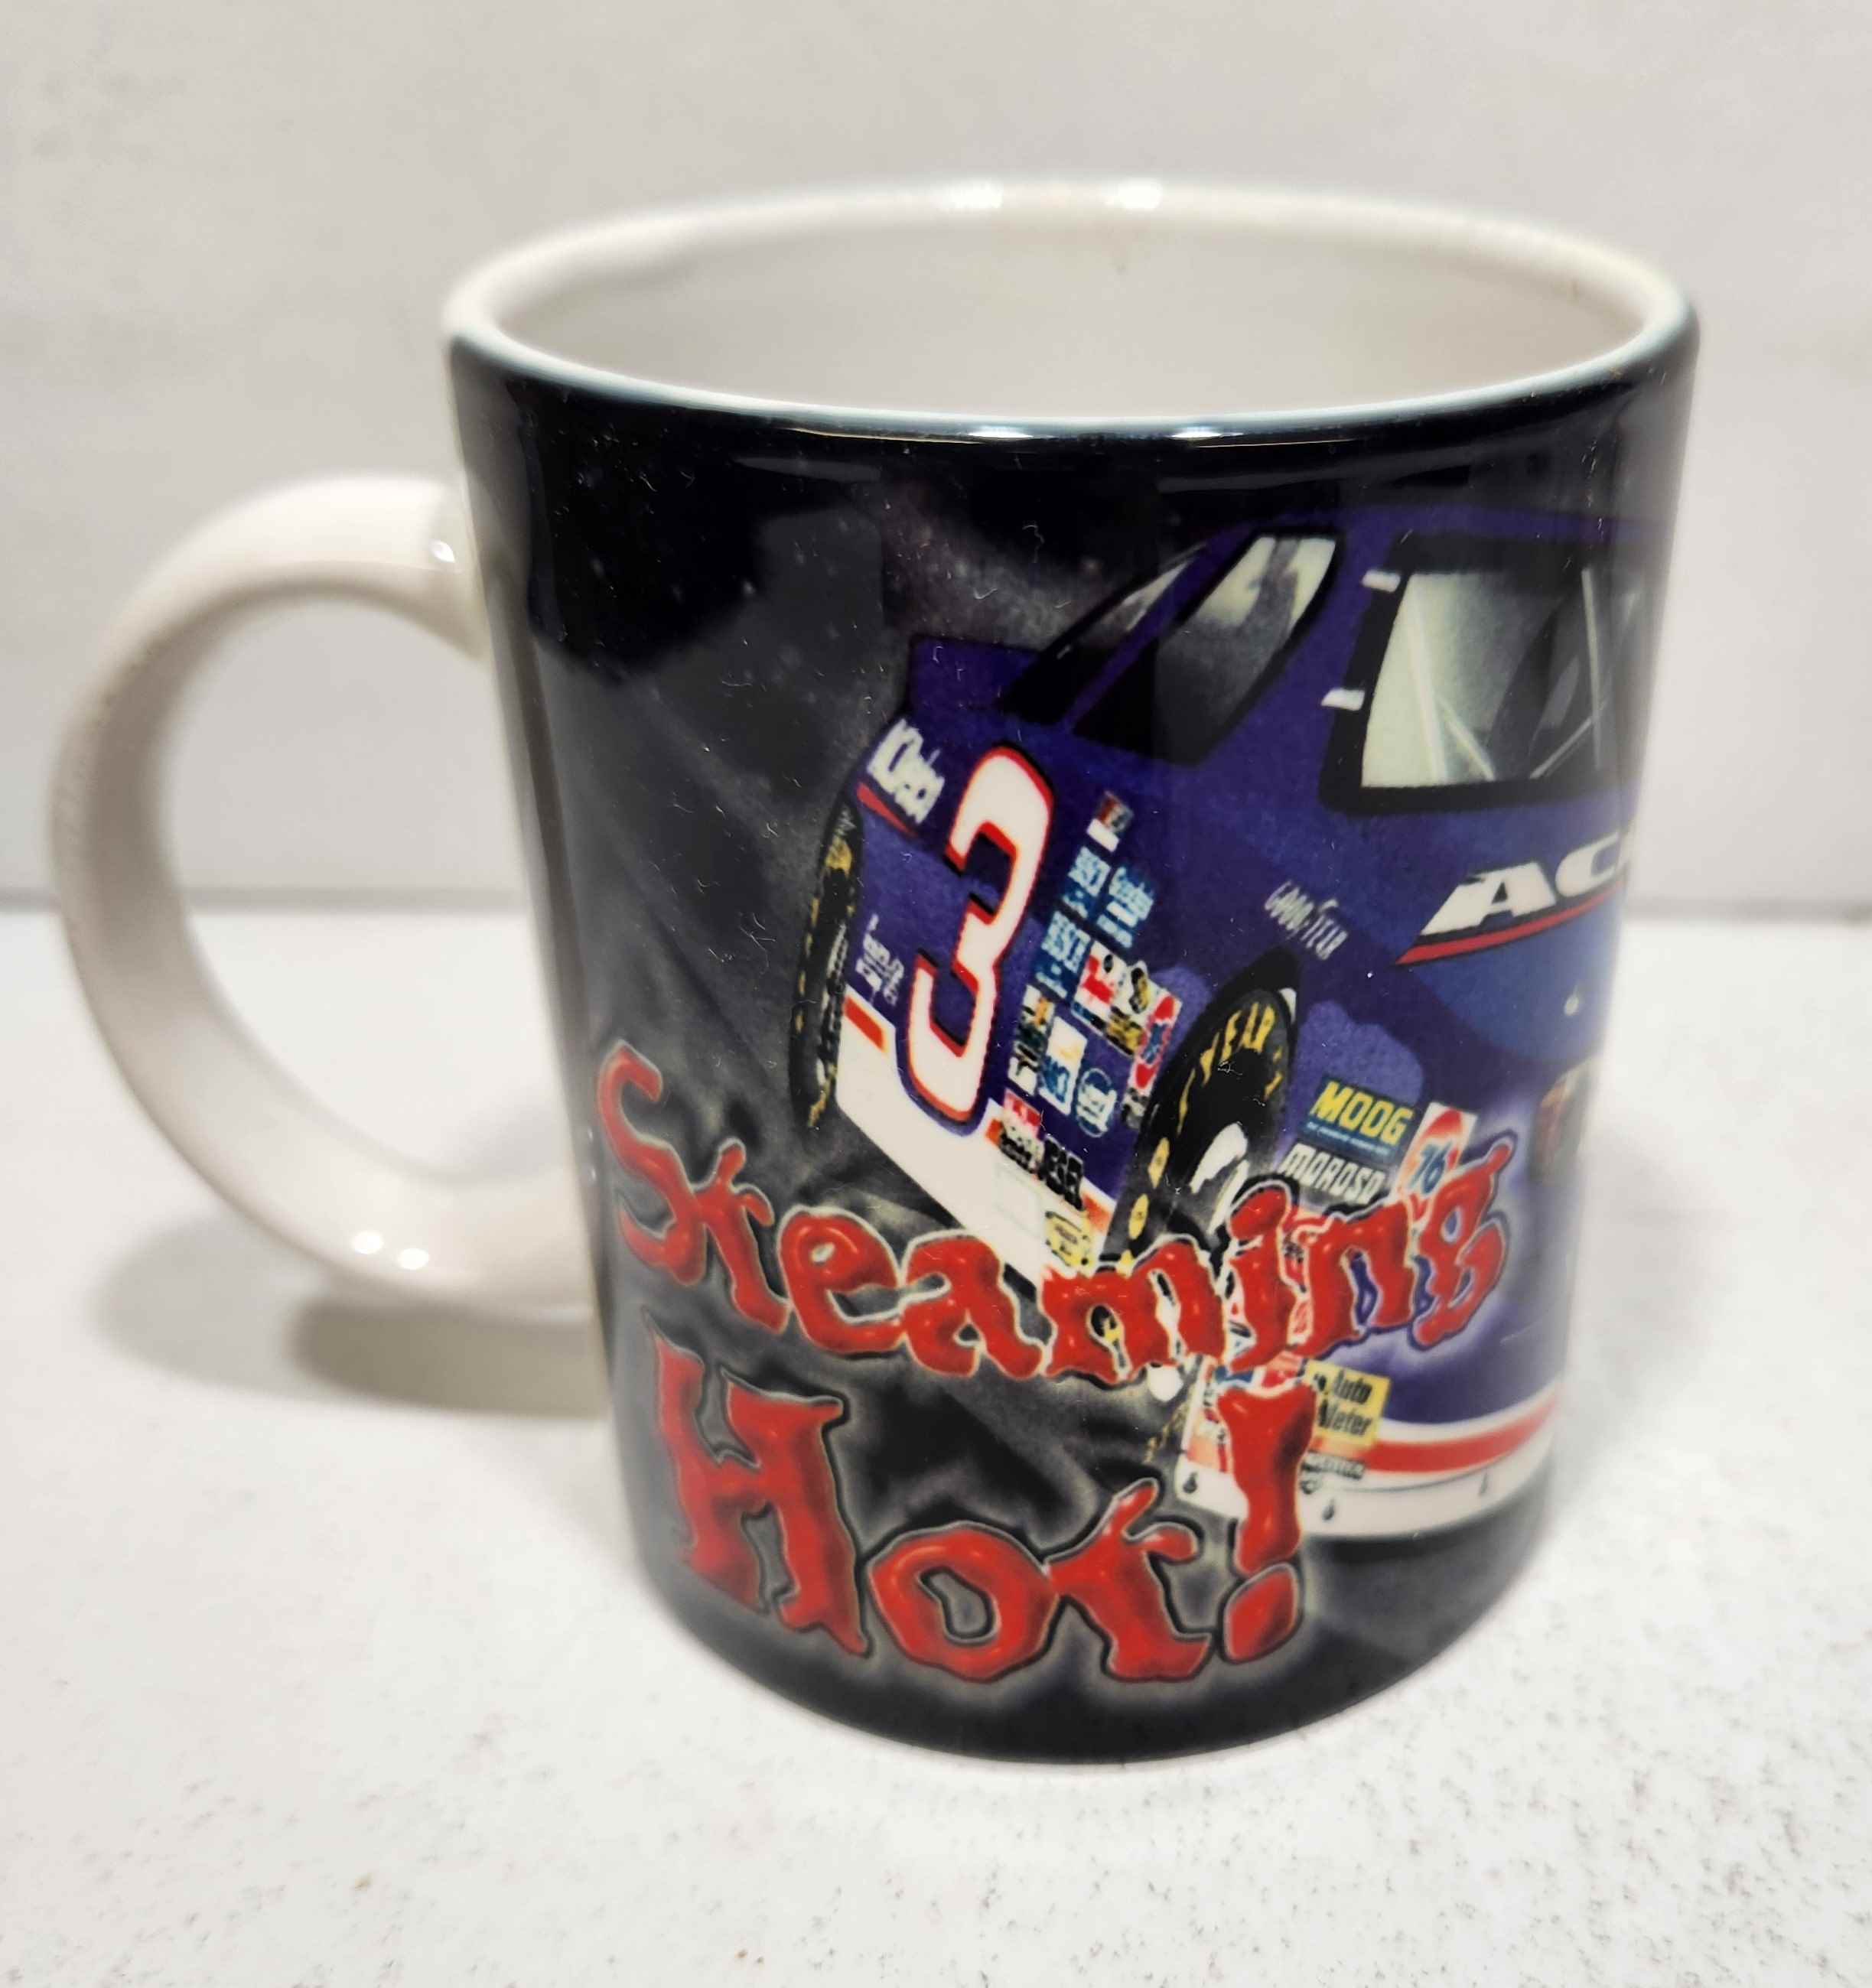 1998 Dale Earnhardt Jr AC Delco "Steaming Hot" collectors mug